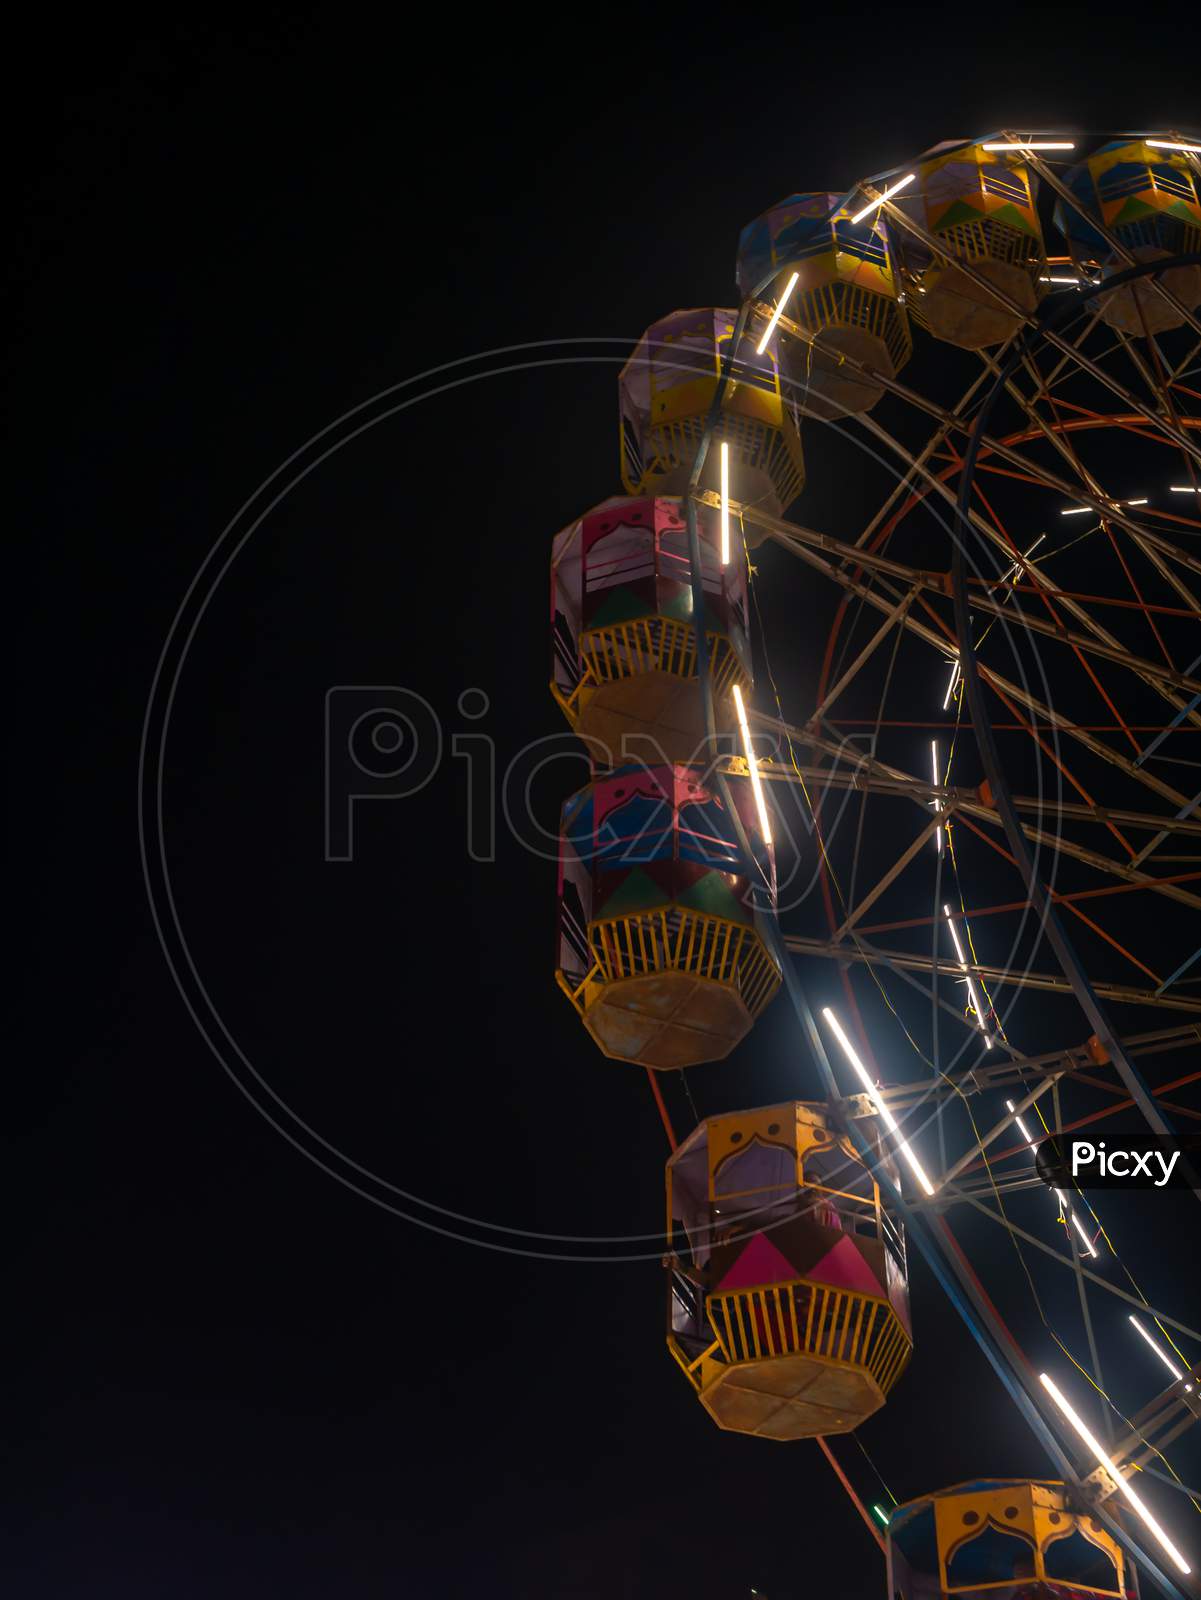 A Colourful Giant Wheel At Amusement Park Illuminated At Night